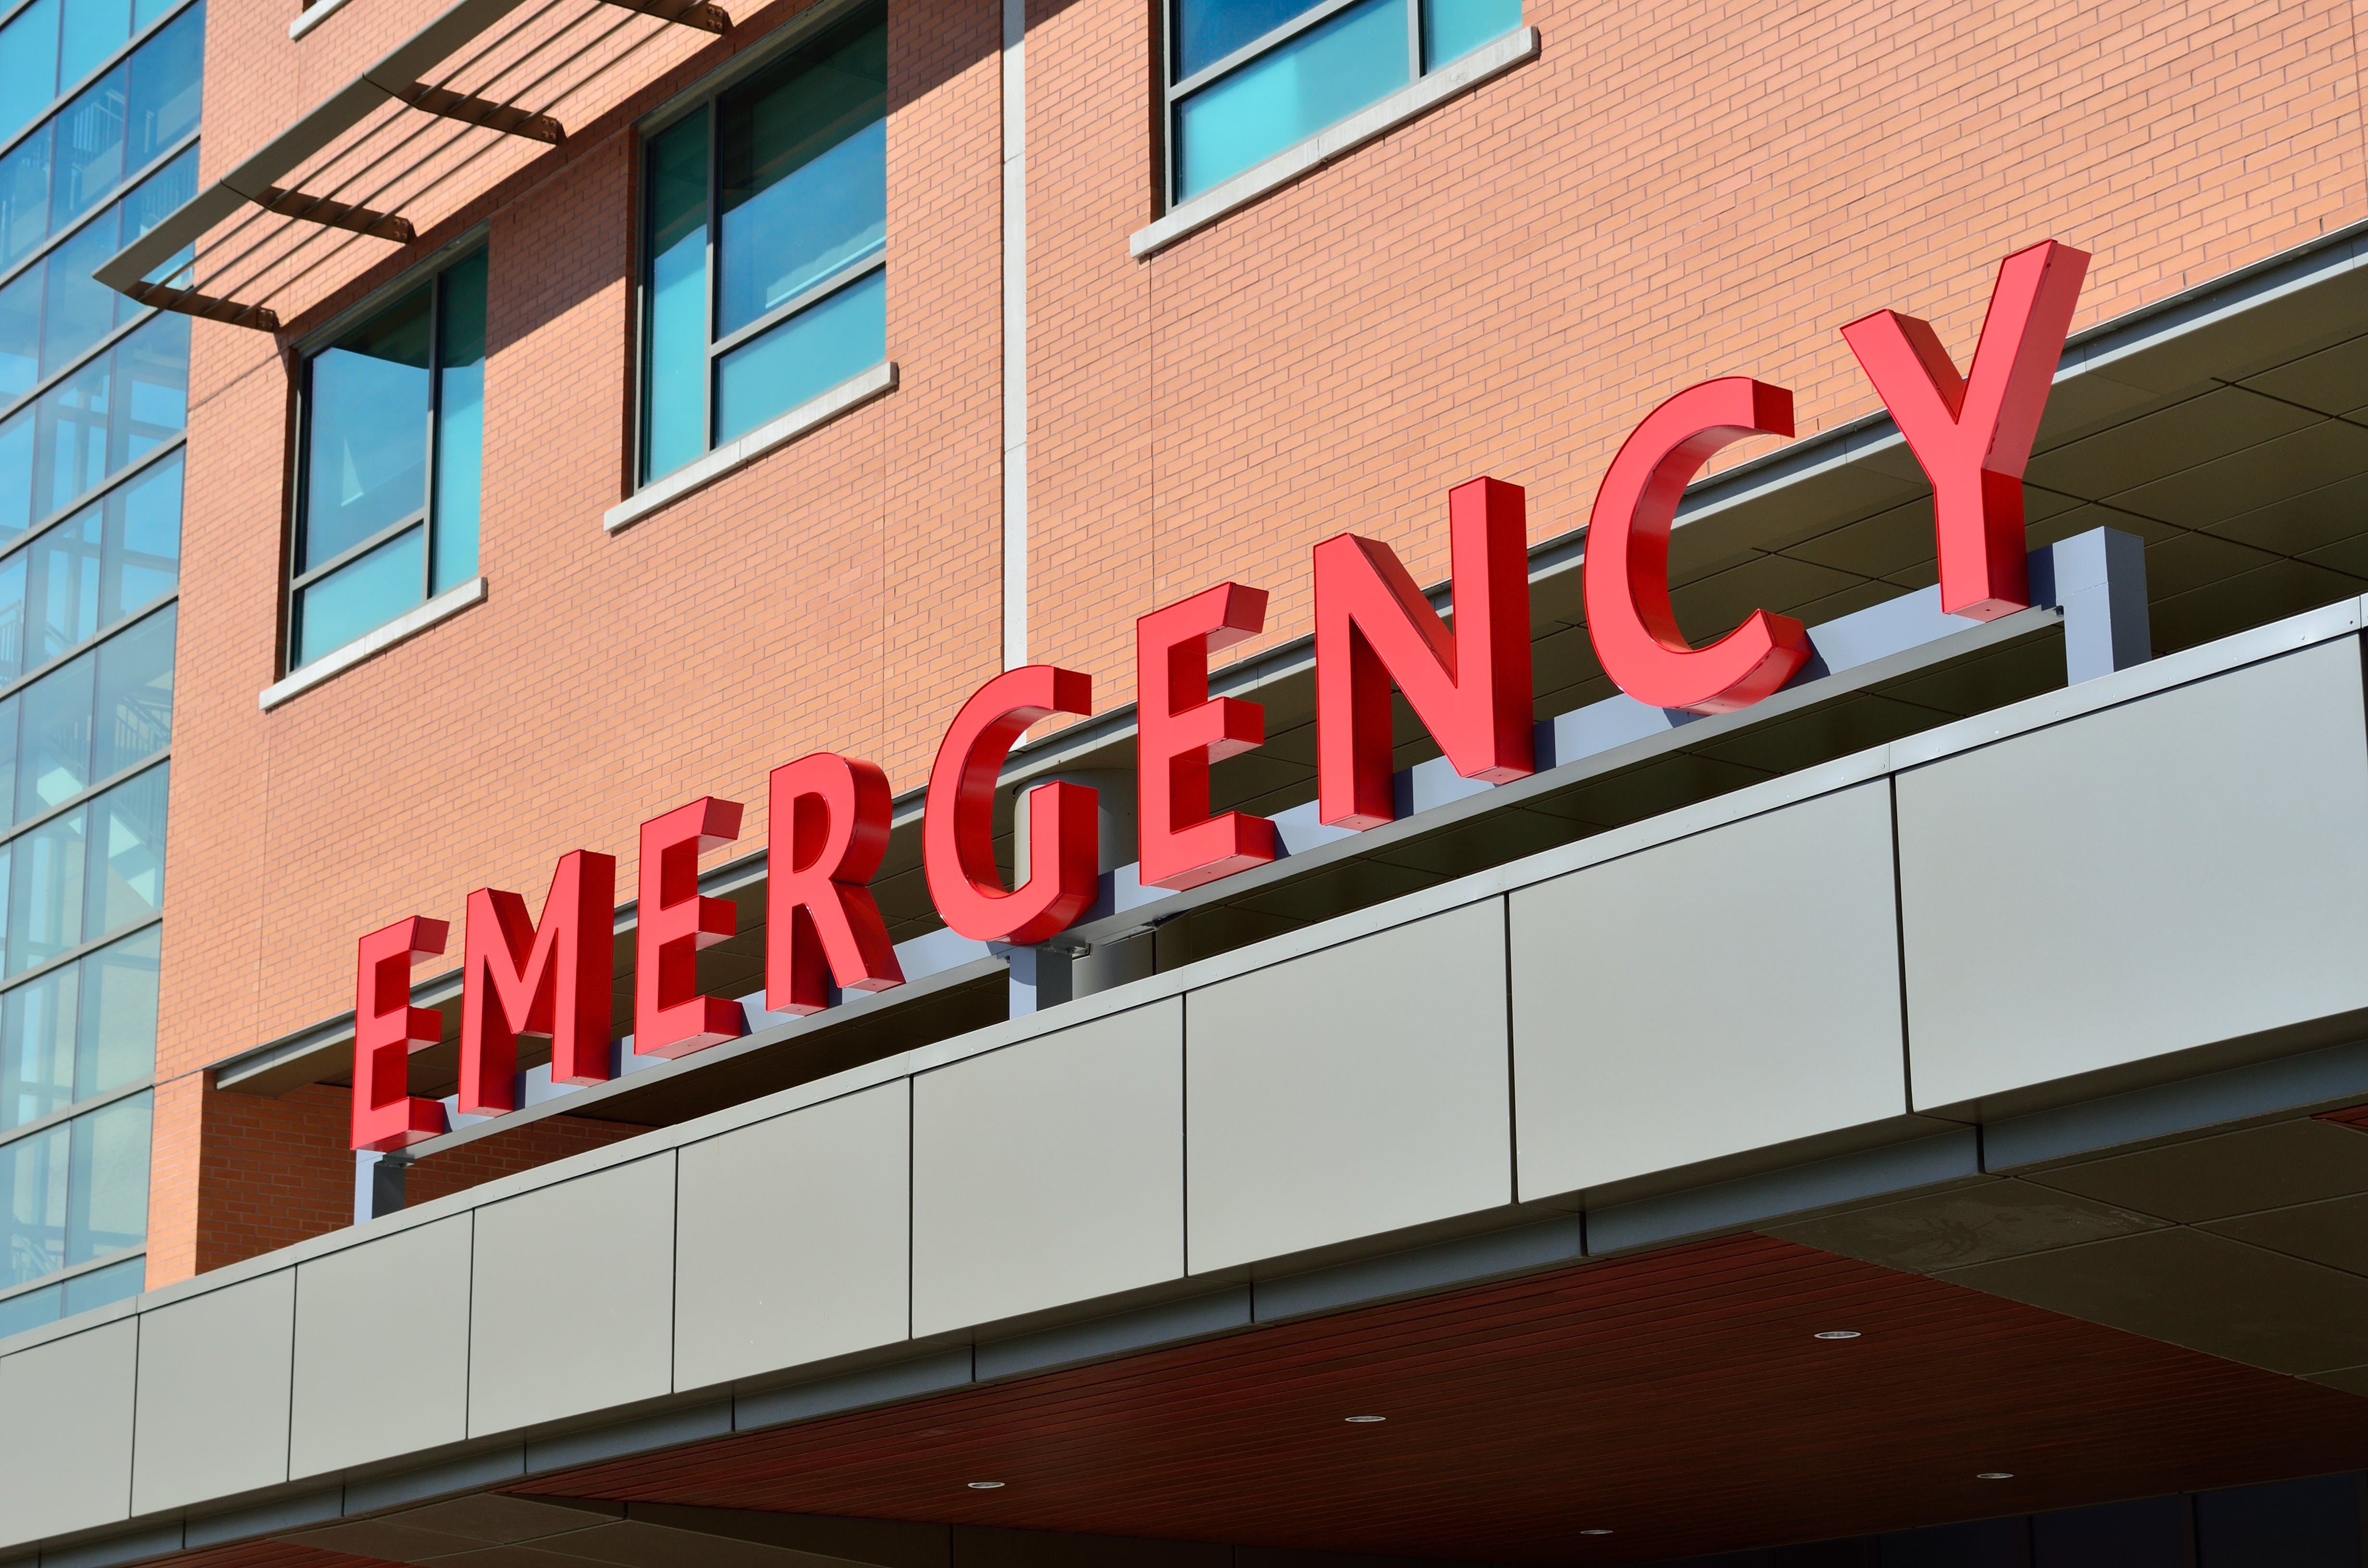 Emergency room sign on a hospital